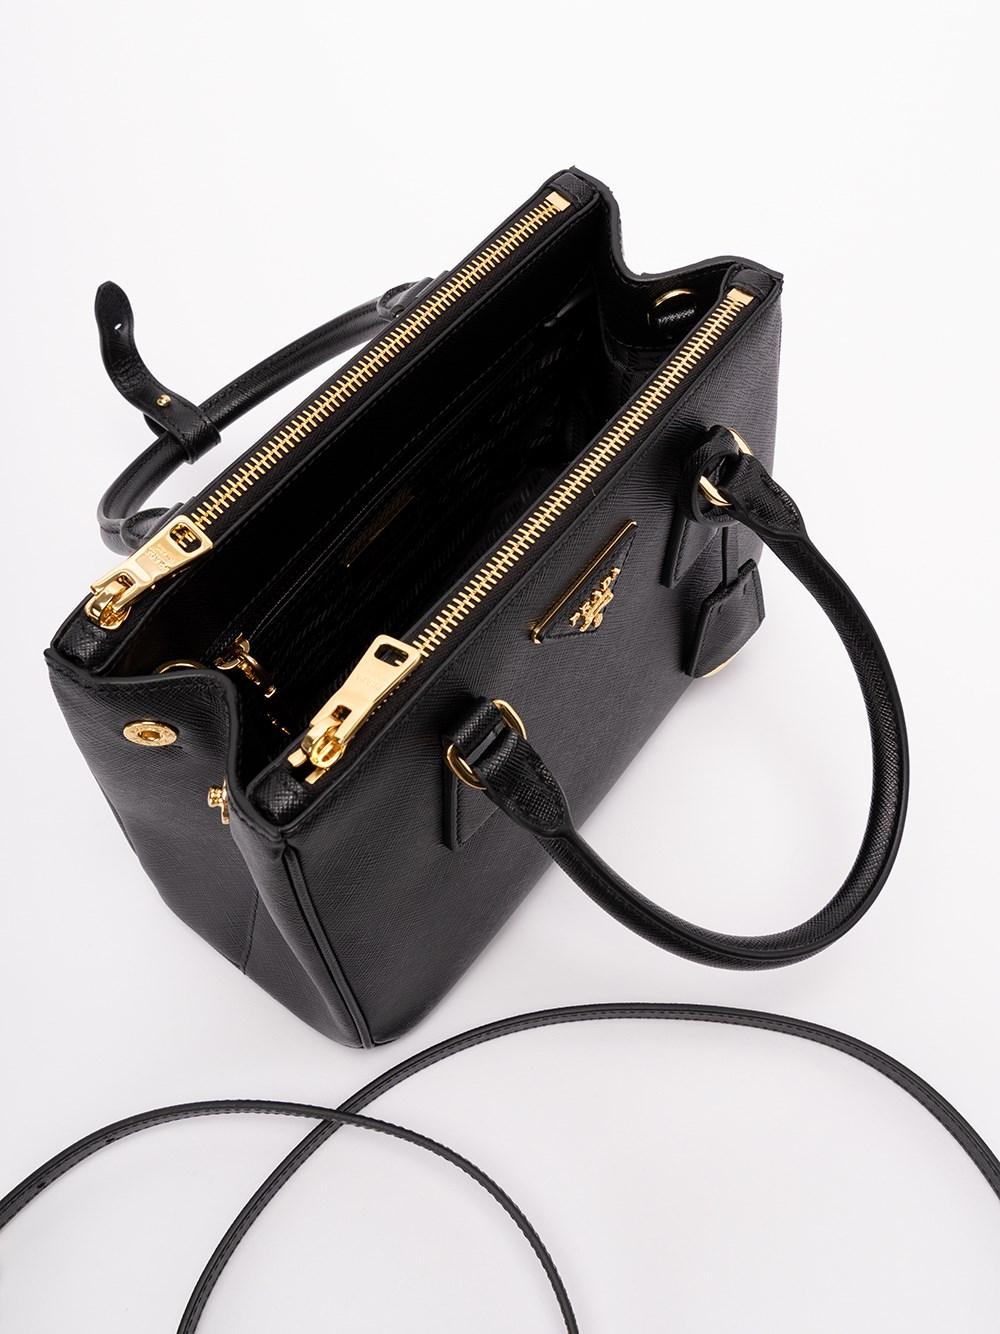 Galleria Small Leather Bag in Black - Prada